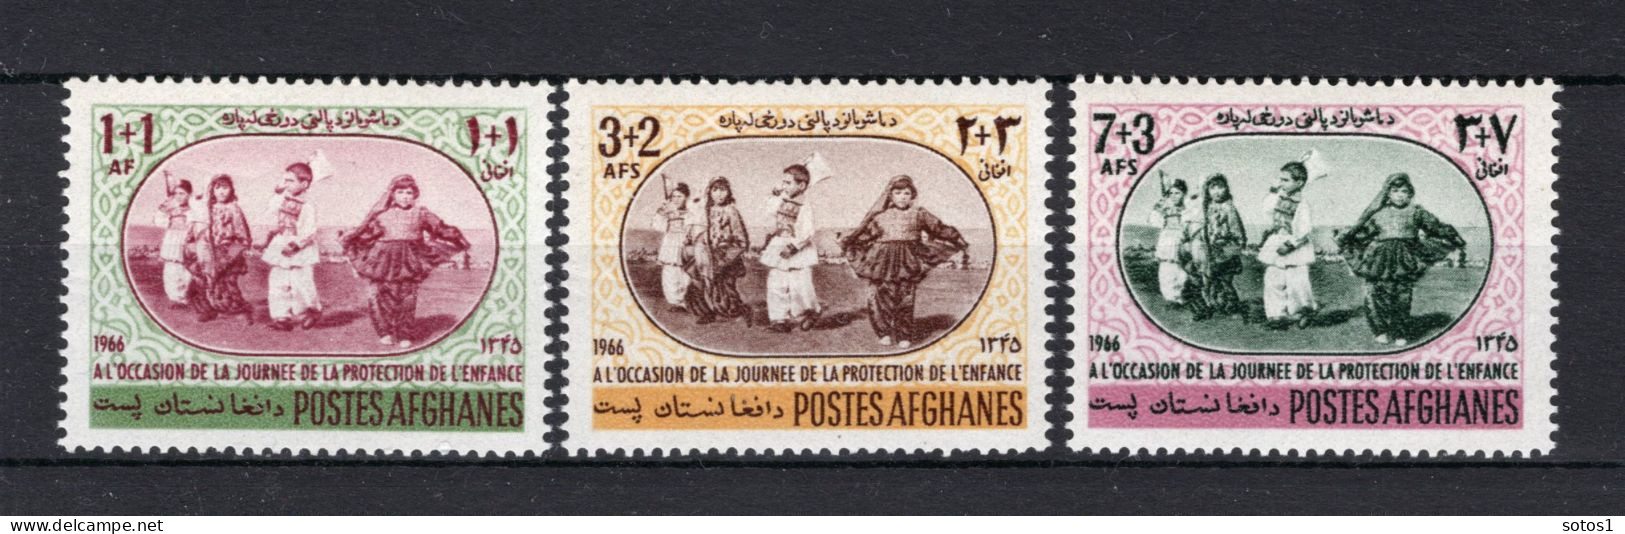 AFGHANISTAN Yt. 821/823 MNH 1966 - Afghanistan